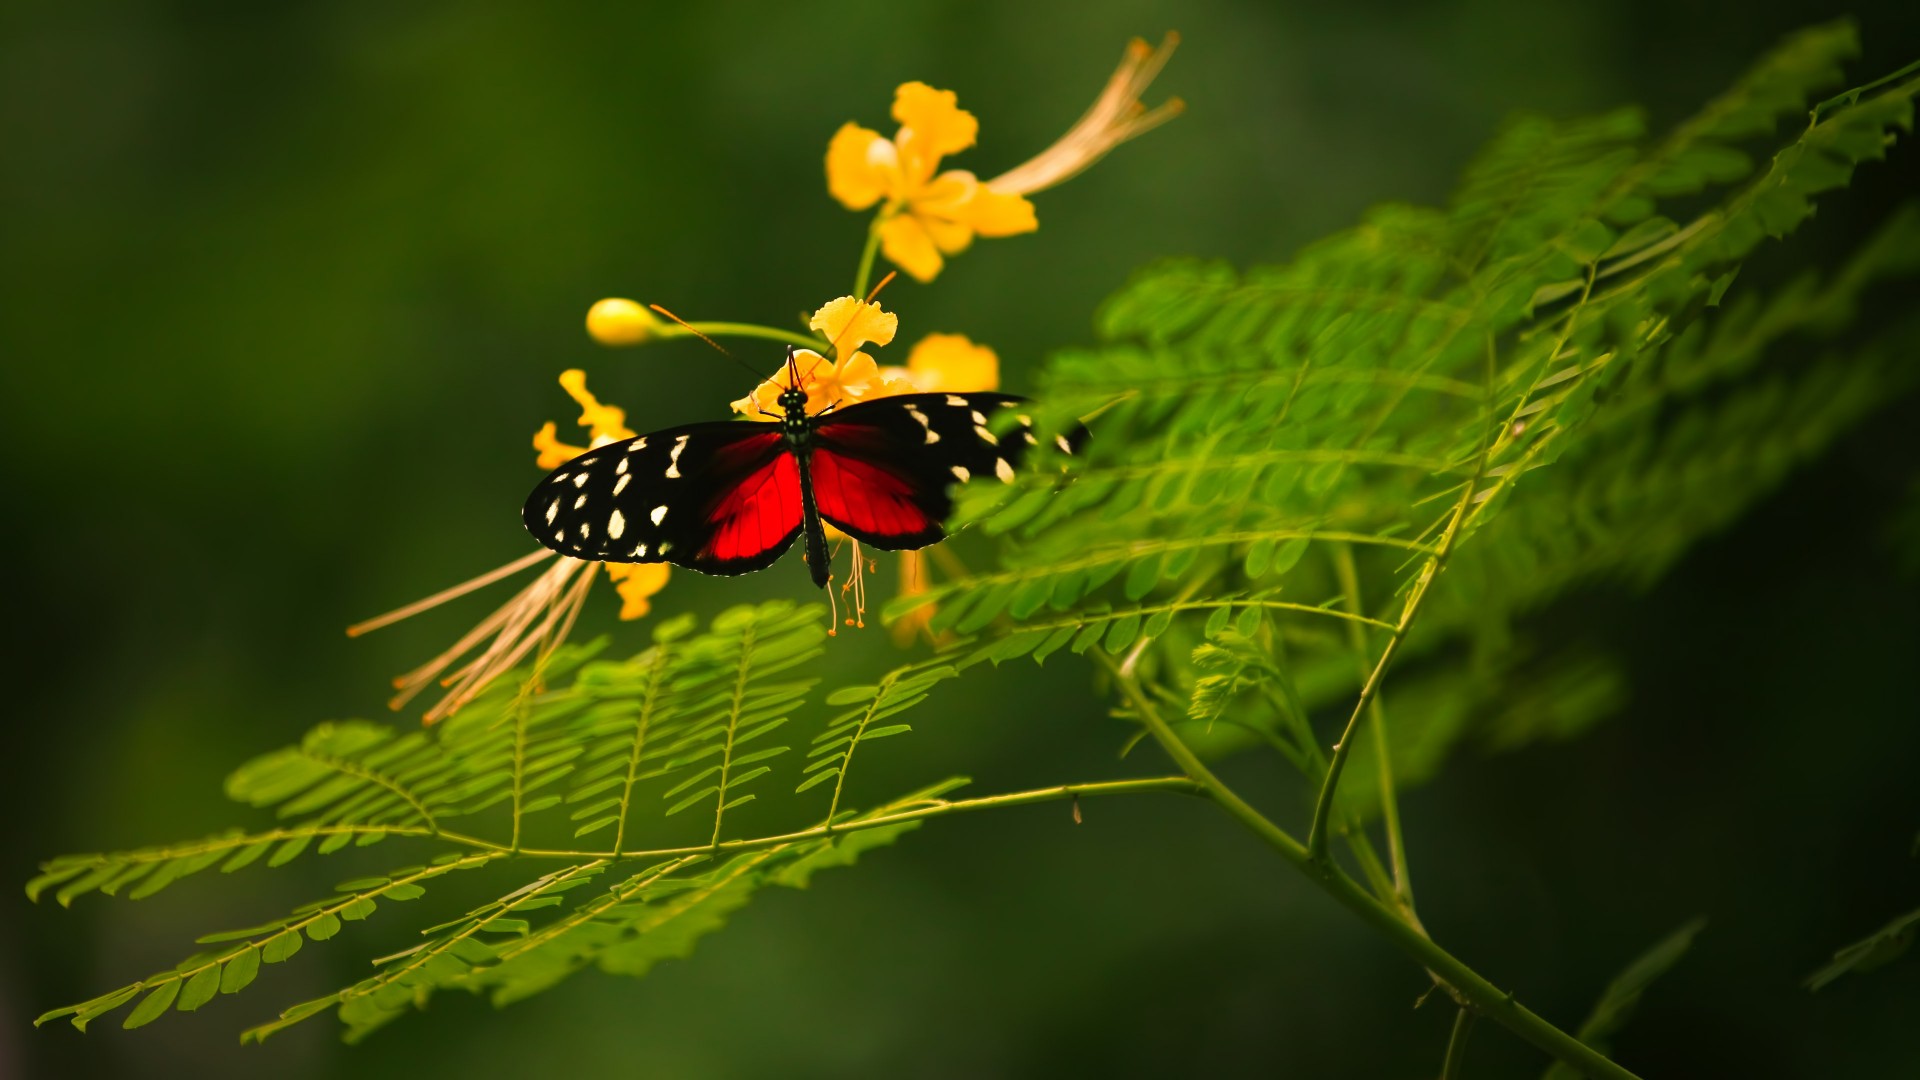 красивая бабочка, красные крылья, зеленый фон, дикая природа, желтые цветы, Beautiful Butterfly, red wings, green background, wild nature, yellow flowers, insects (horizontal)